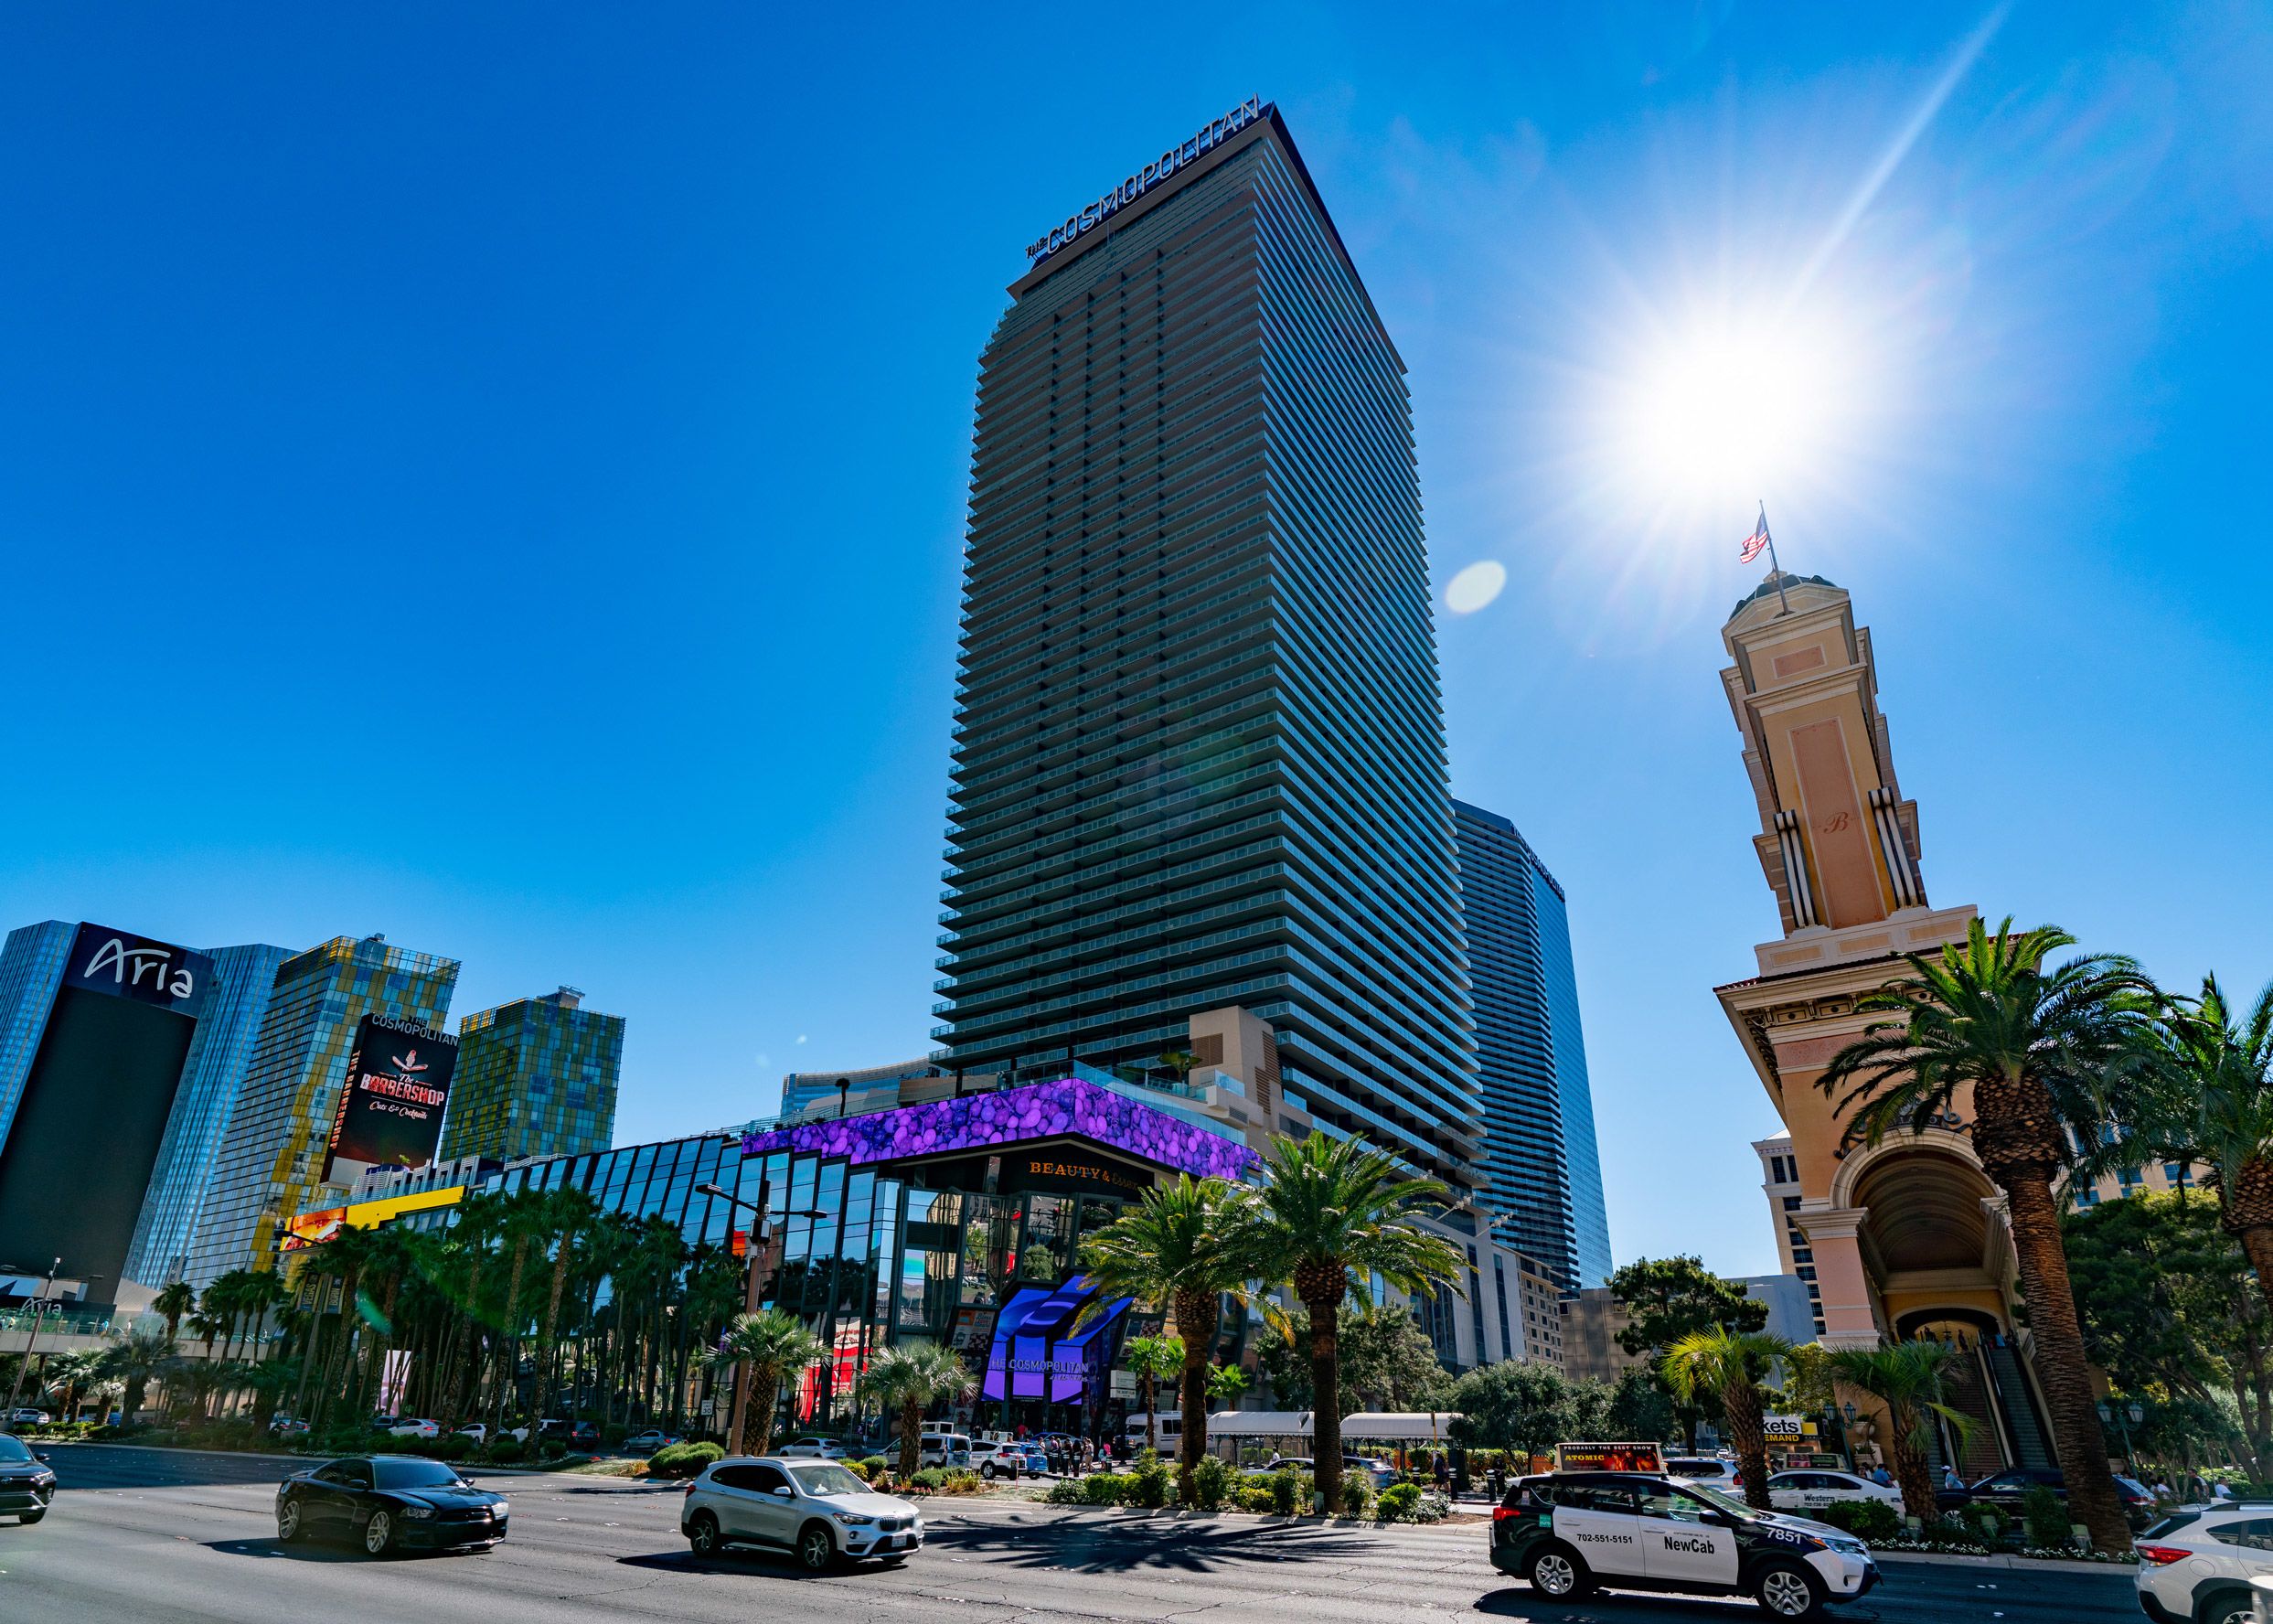 Las Vegas Casino Owner Surprises 5 000 Employees With 5 000 Bonuses Cnn Business